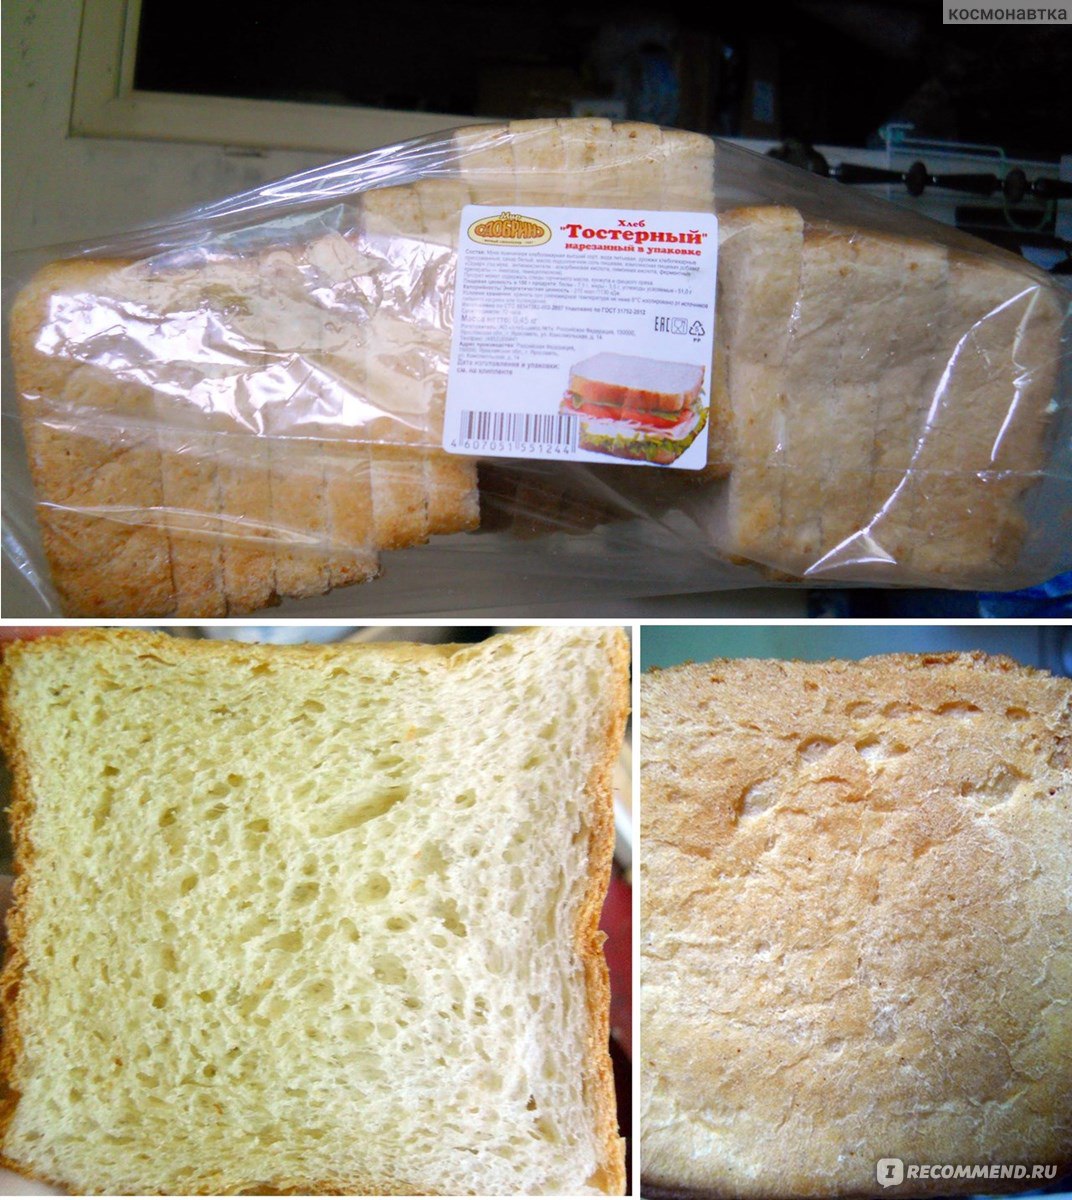 Хлеб бывший